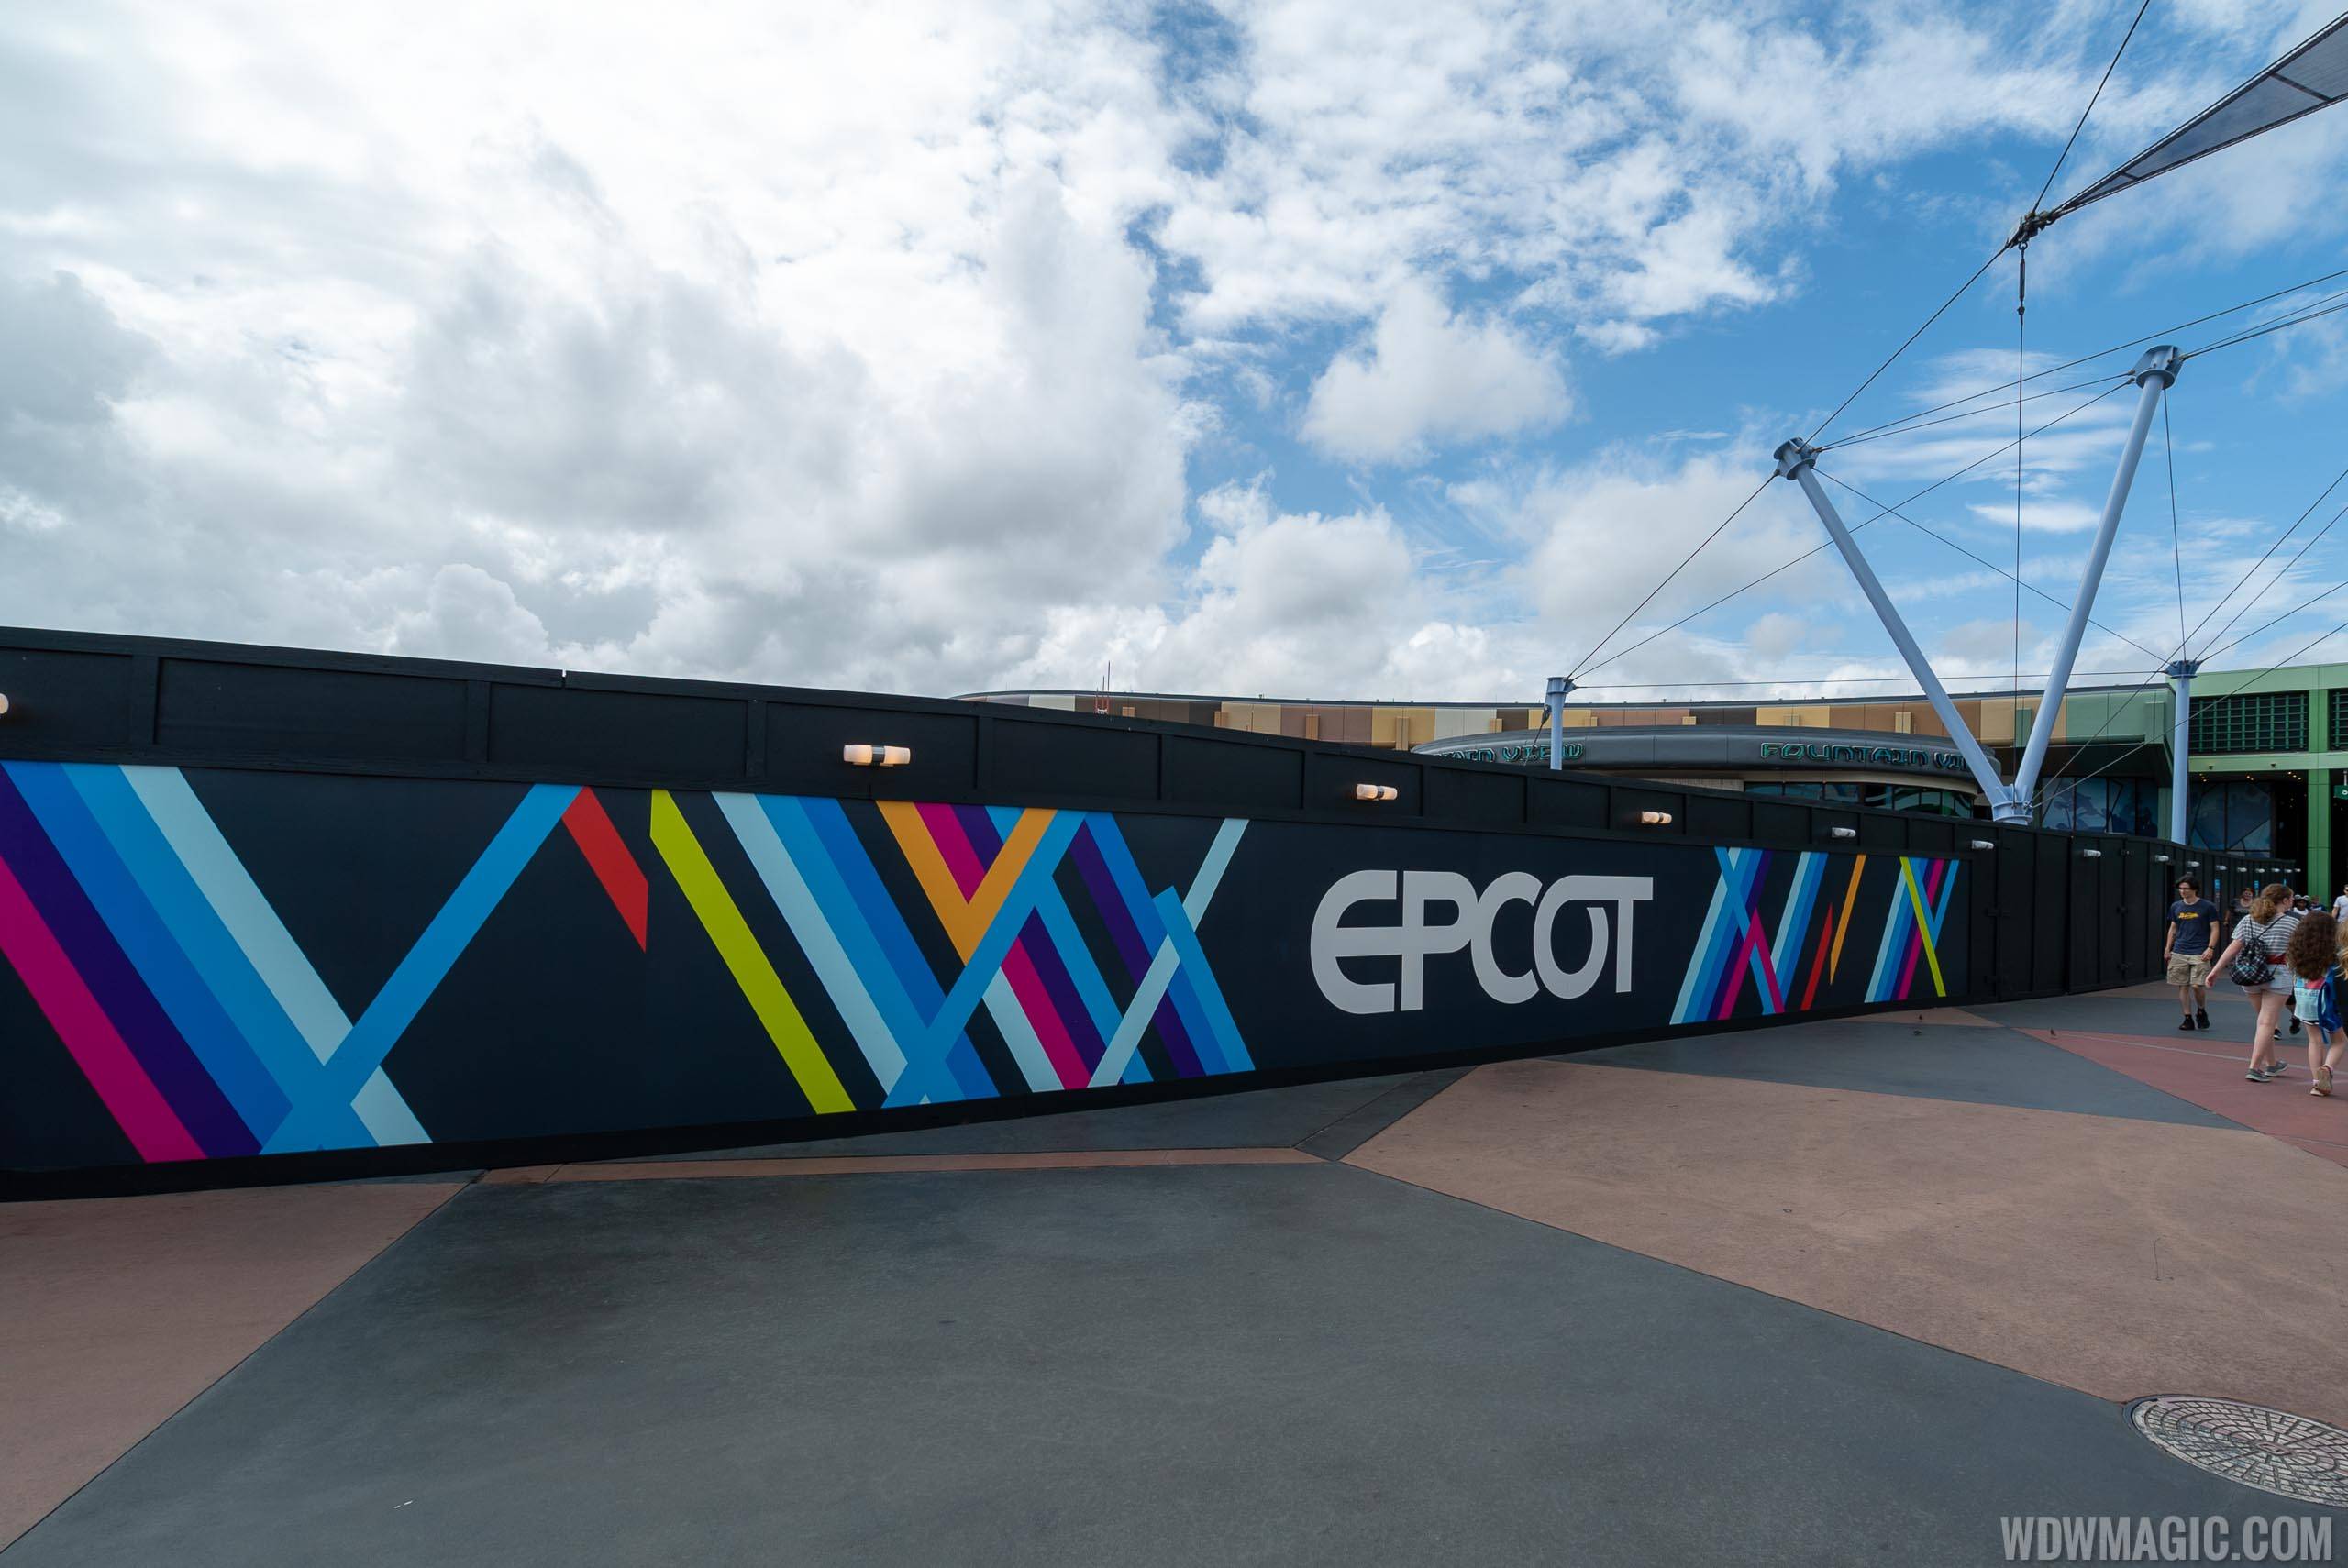 Epcot central area construction - October 2019